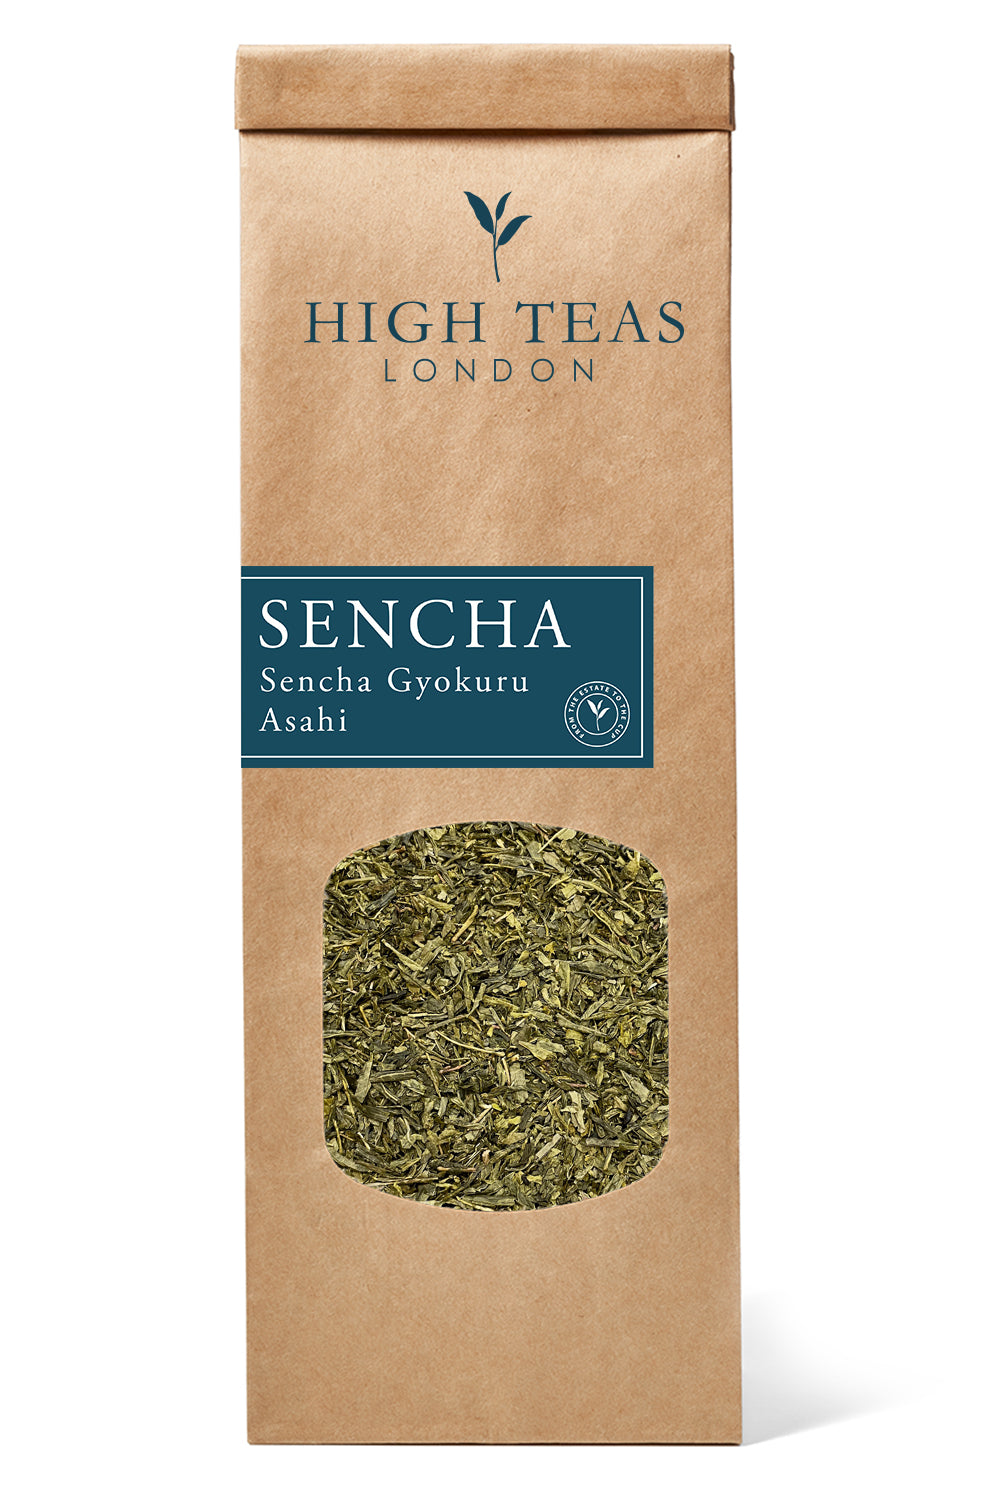 Sencha Gyokuru Asahi-50g-Loose Leaf Tea-High Teas